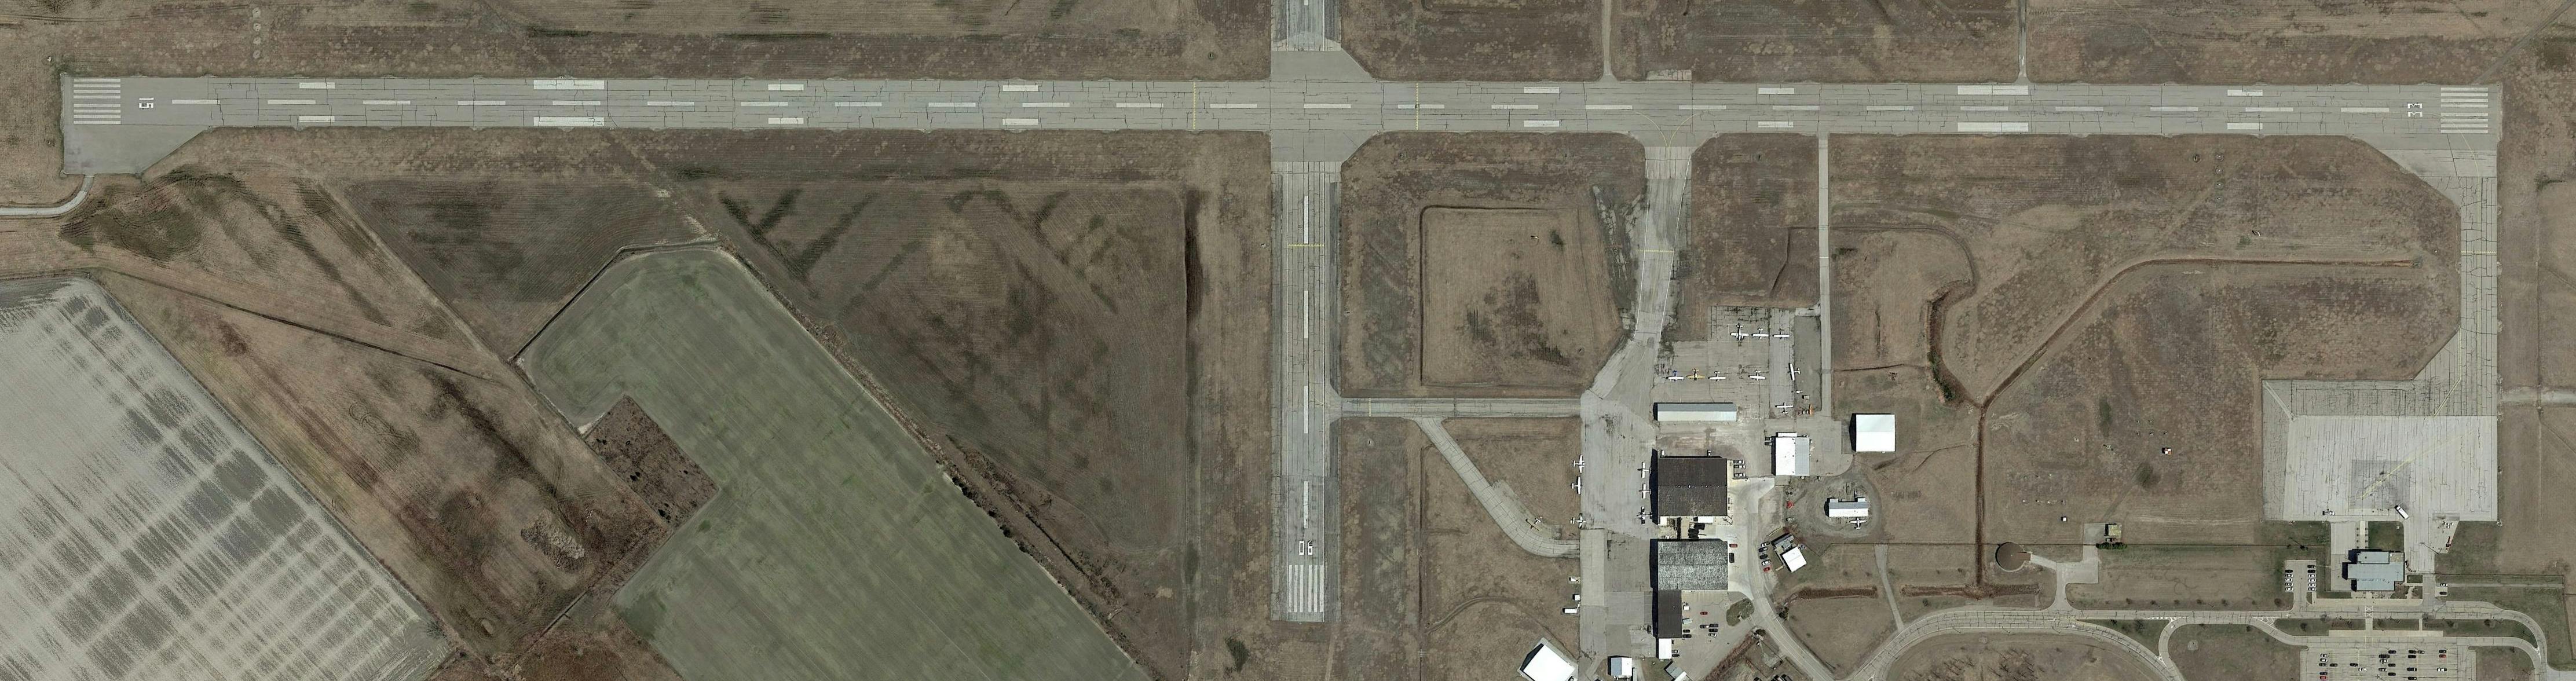 Sarnia Chris Hadfield Airport (aerial image, Google Earth)